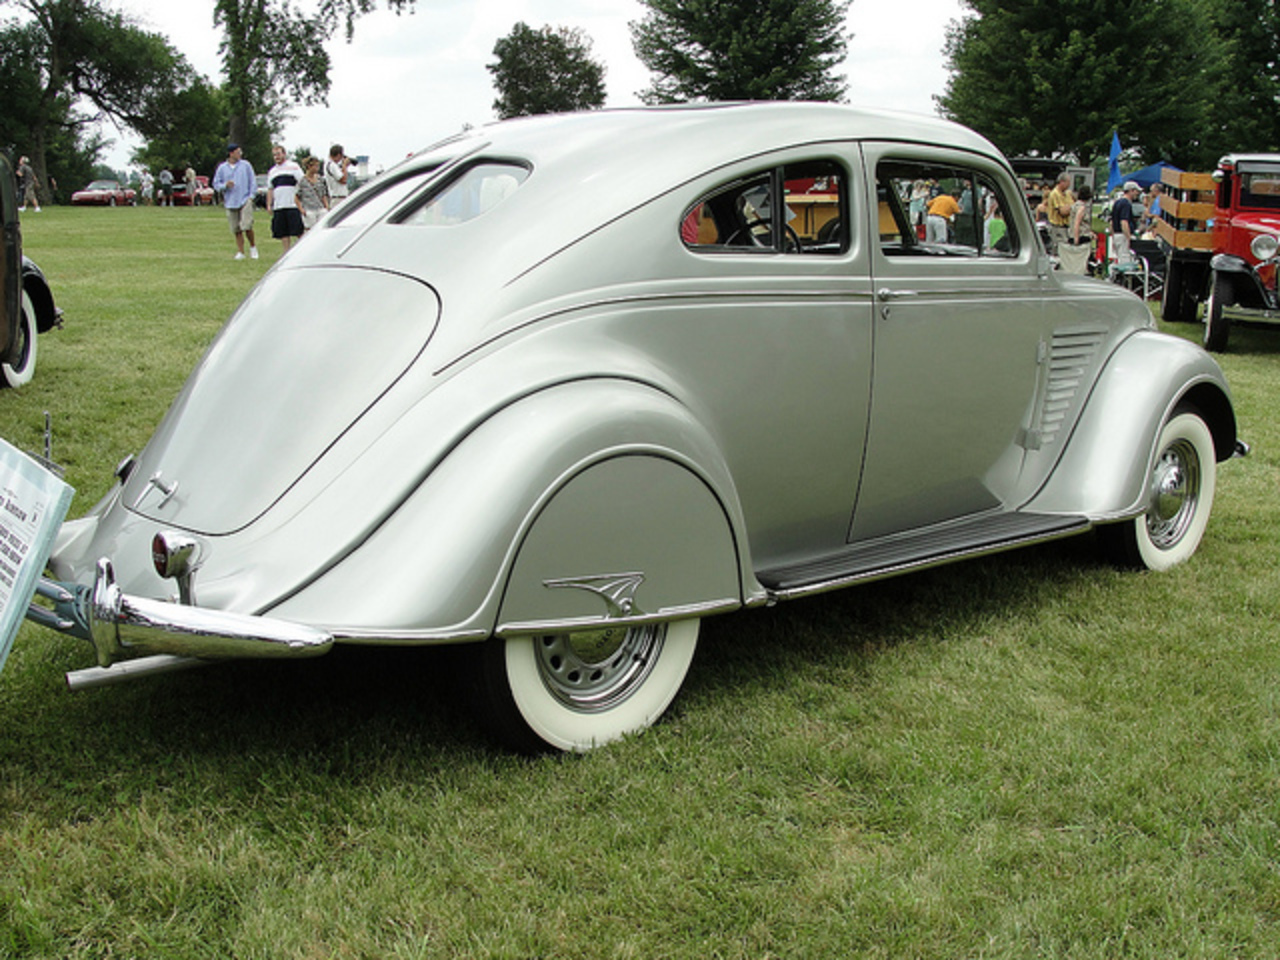 1934 de soto coupe airflow / Flickr - Partage de photos!